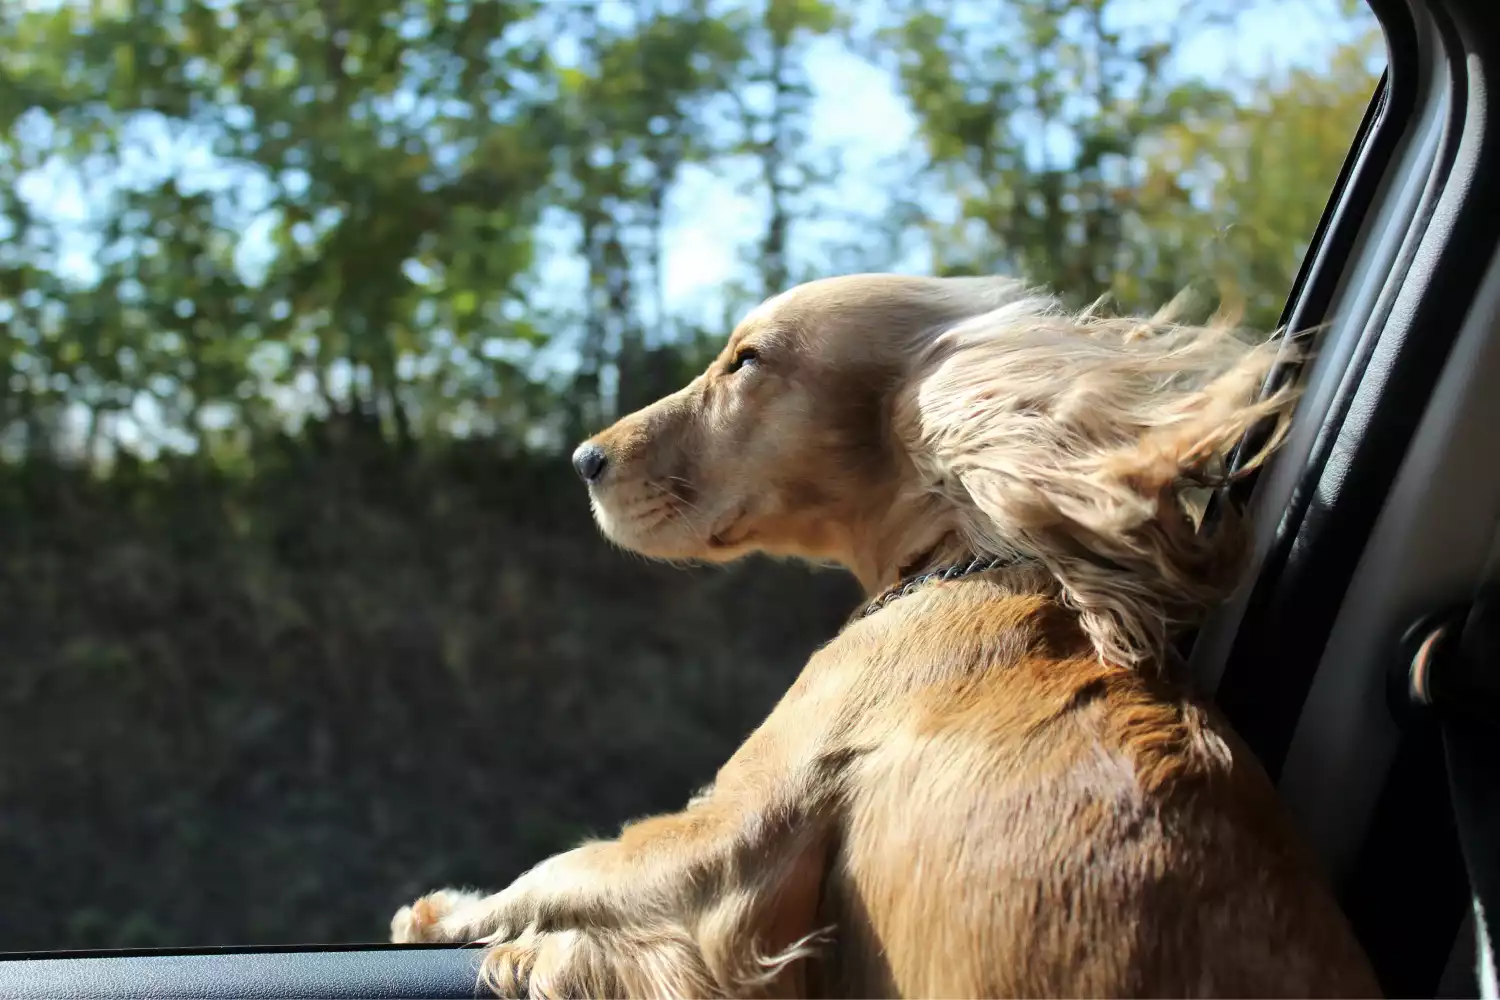 Nissan Pathfinder Dog Car Seat for Cocker Spaniels